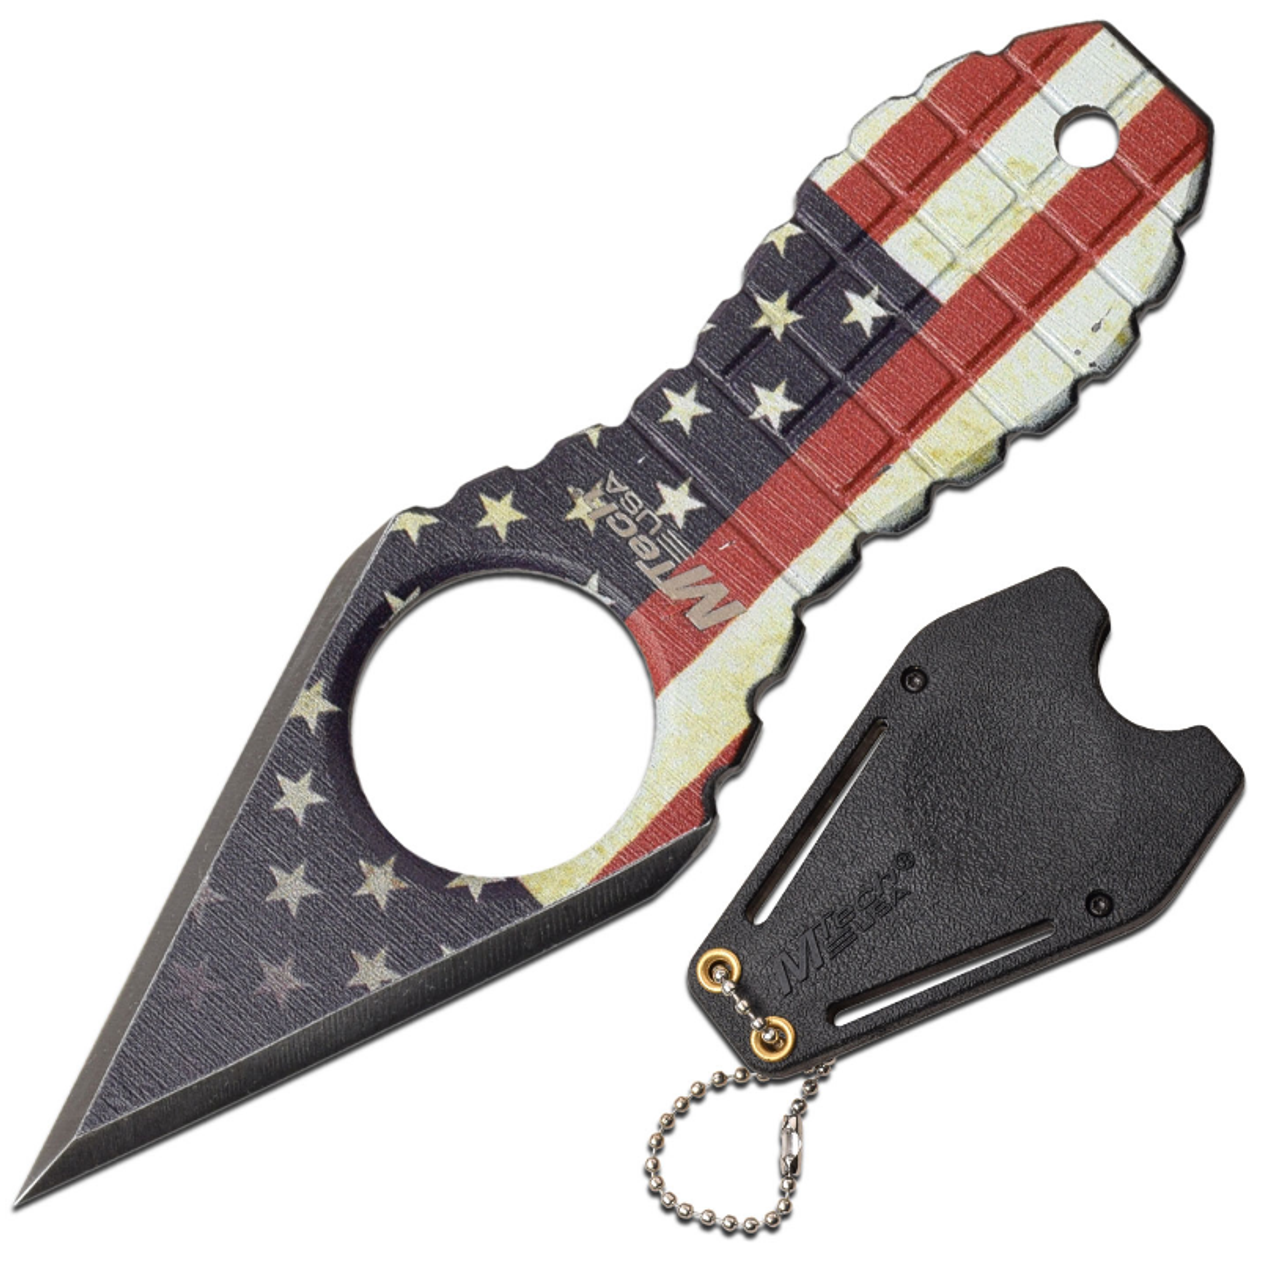 MTECH NECK KNIFE, 4.25" OVERALL, US FLAG, GRENADE HNDL